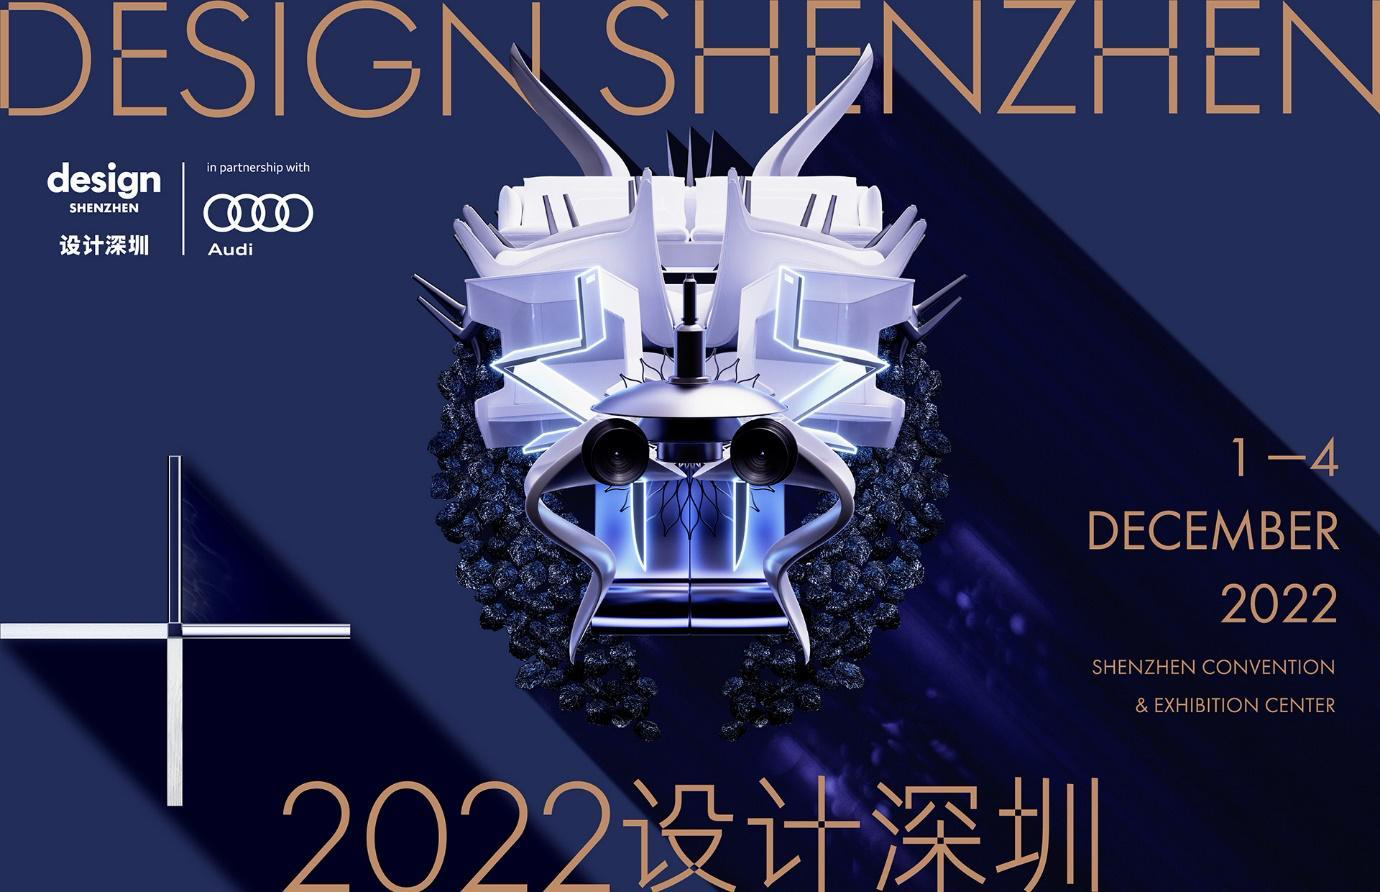 China's Creative Future: The launch of Design Shenzhen